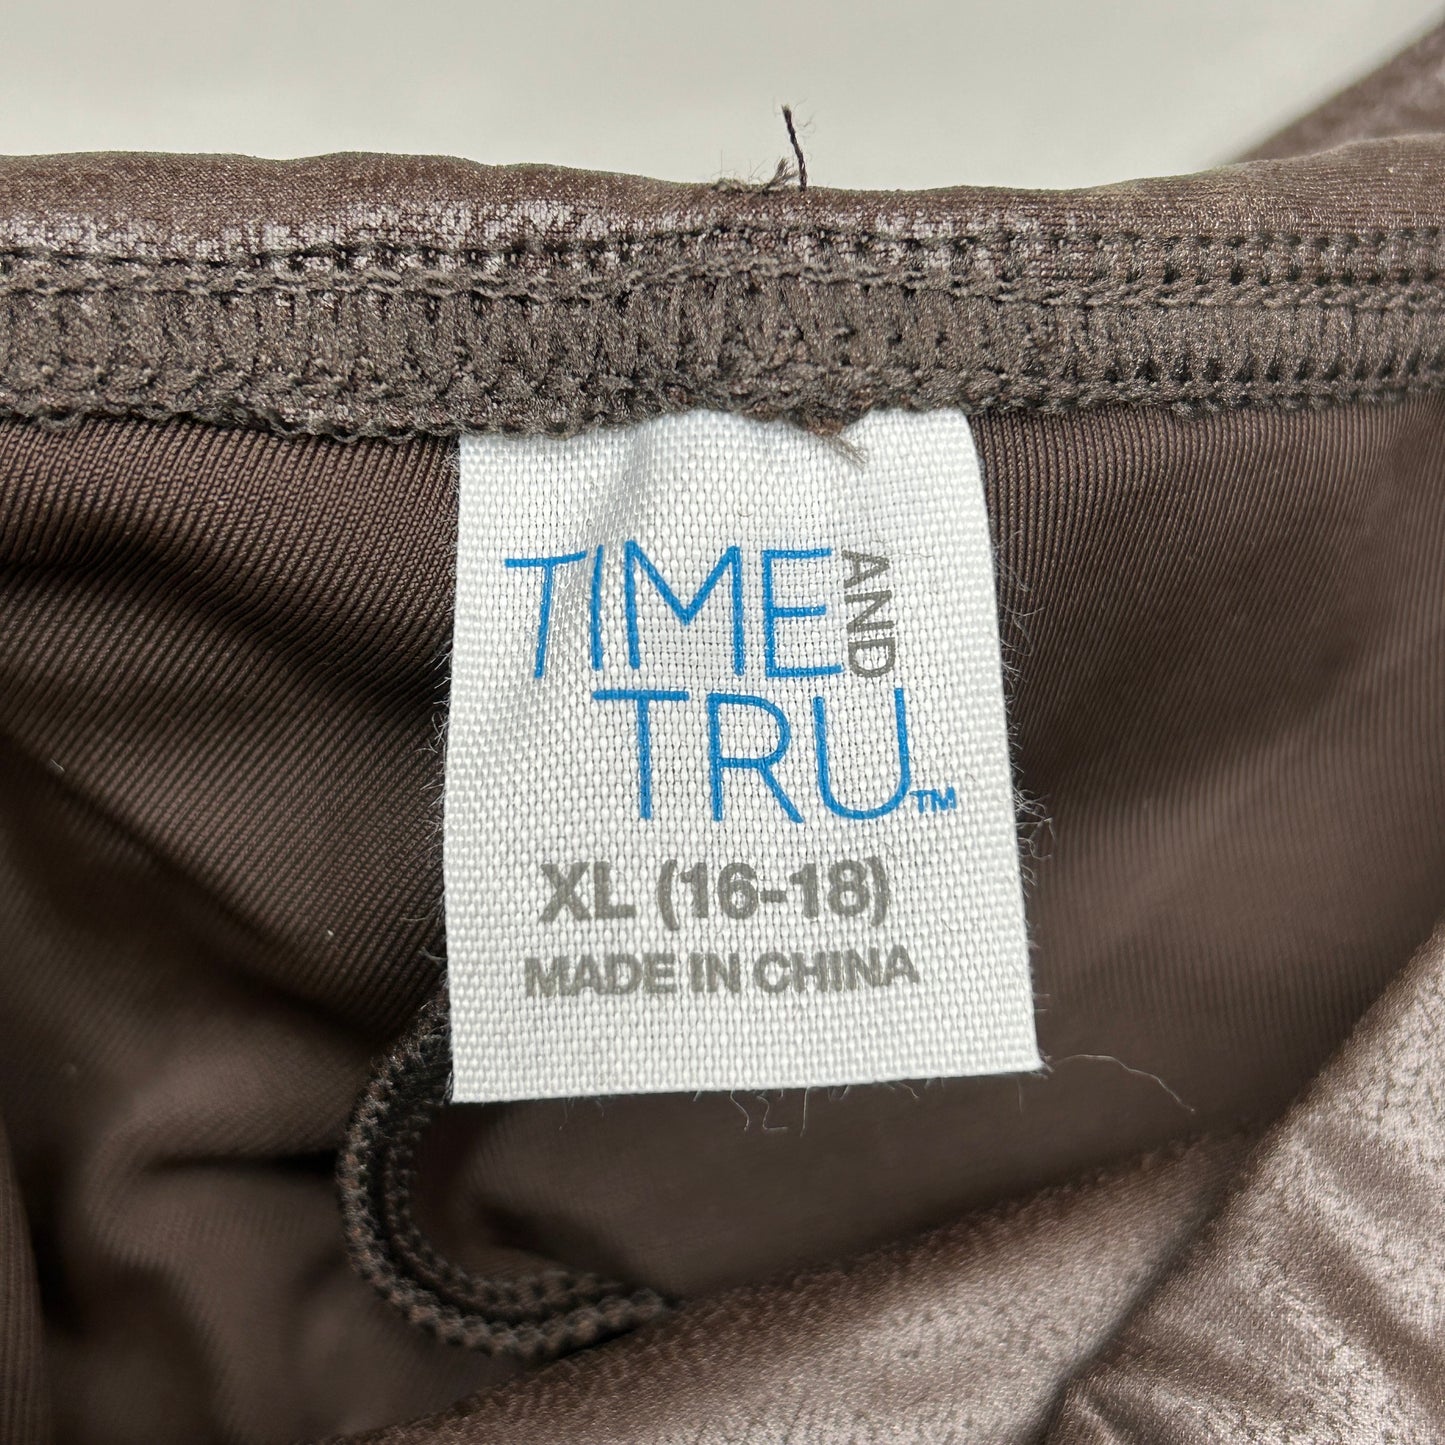 Time & Tru Women's Faux Leather Leggings; XL (16-18), Black Faux Leather